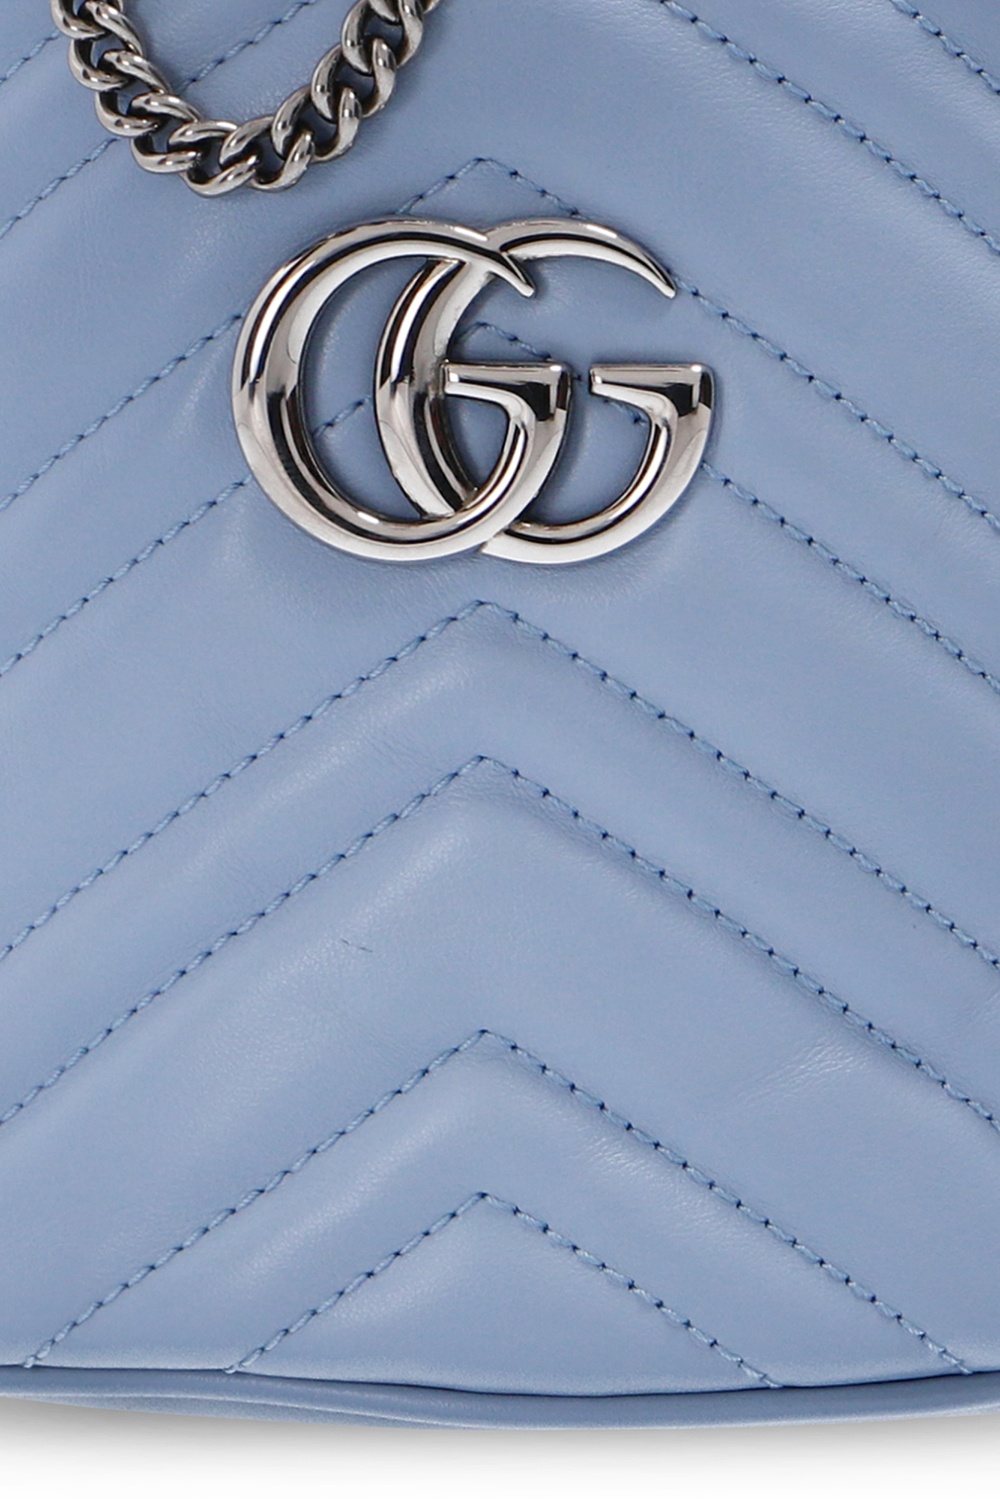 Gucci Pikowana torba na ramię ‘GG Marmont’